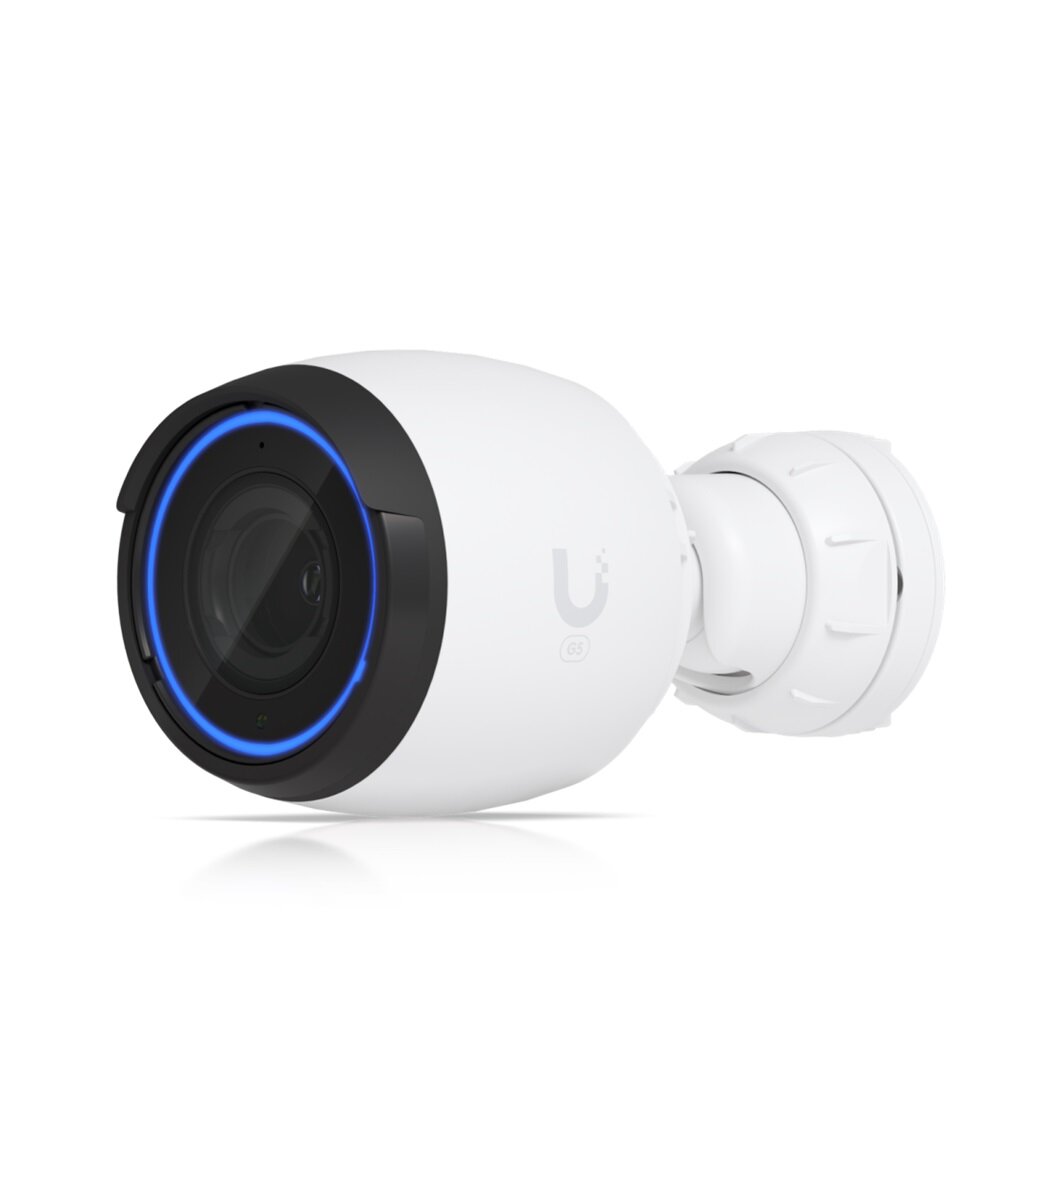 Kamera Ubiquiti UVC-G5-PRO 4K Ultra HD po skosie na białym tle